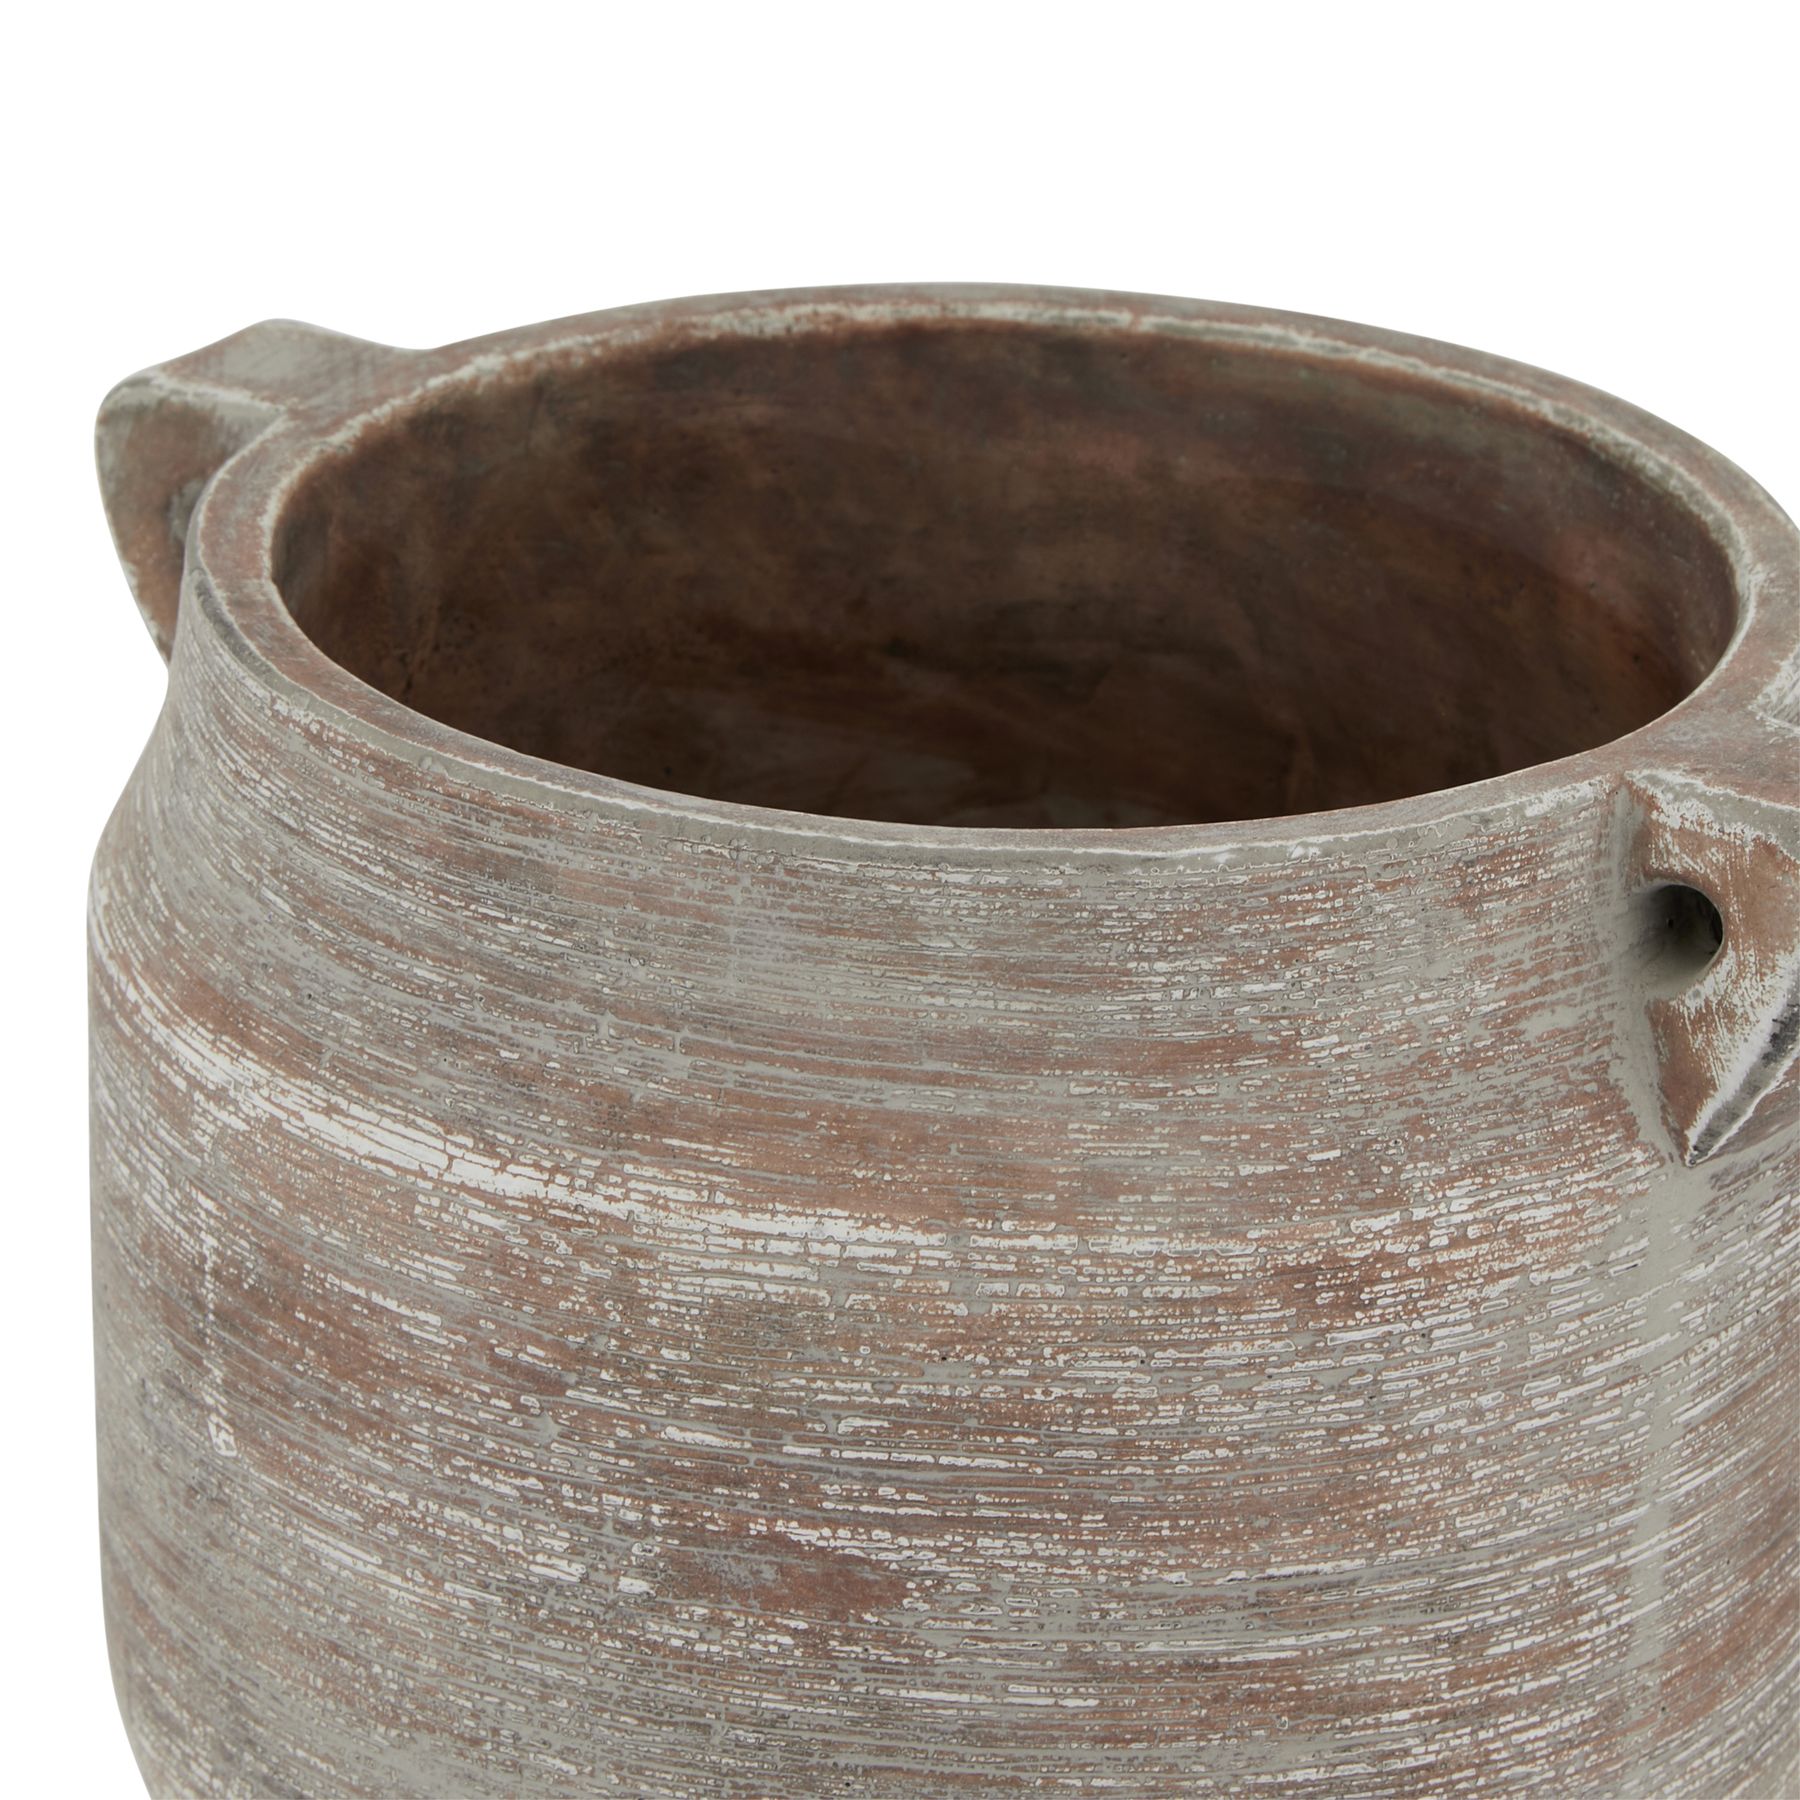 Siena Brown Hydria Pot - Image 2